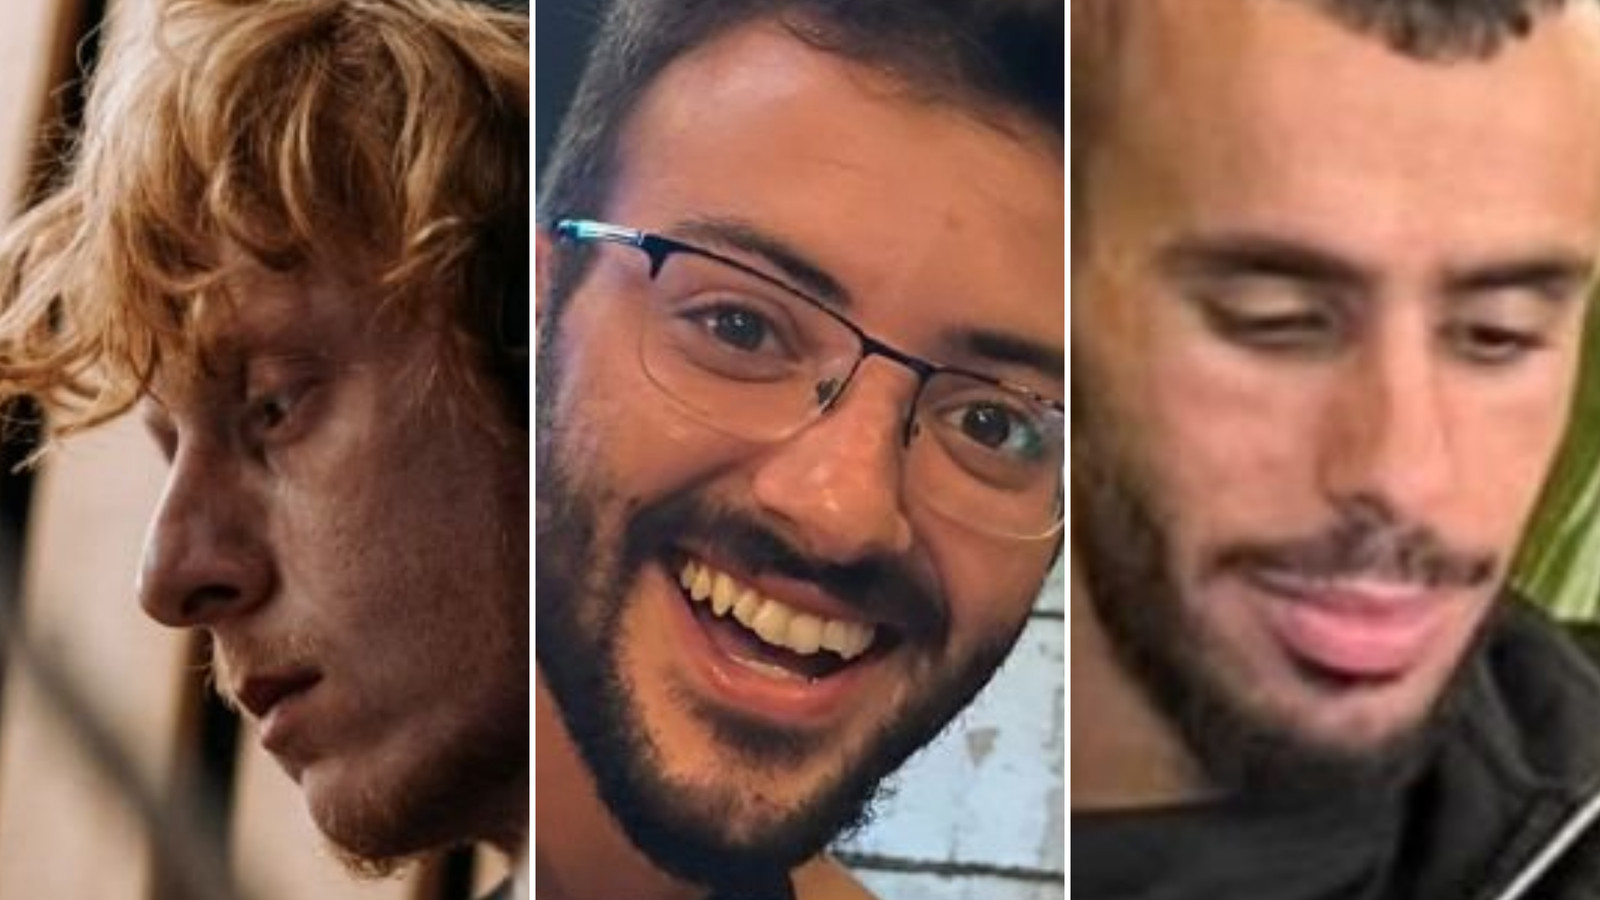 The three hostages killed are identified as, from left to right, Yotam Haim, Alon Shamriz, and Samer Talalka.